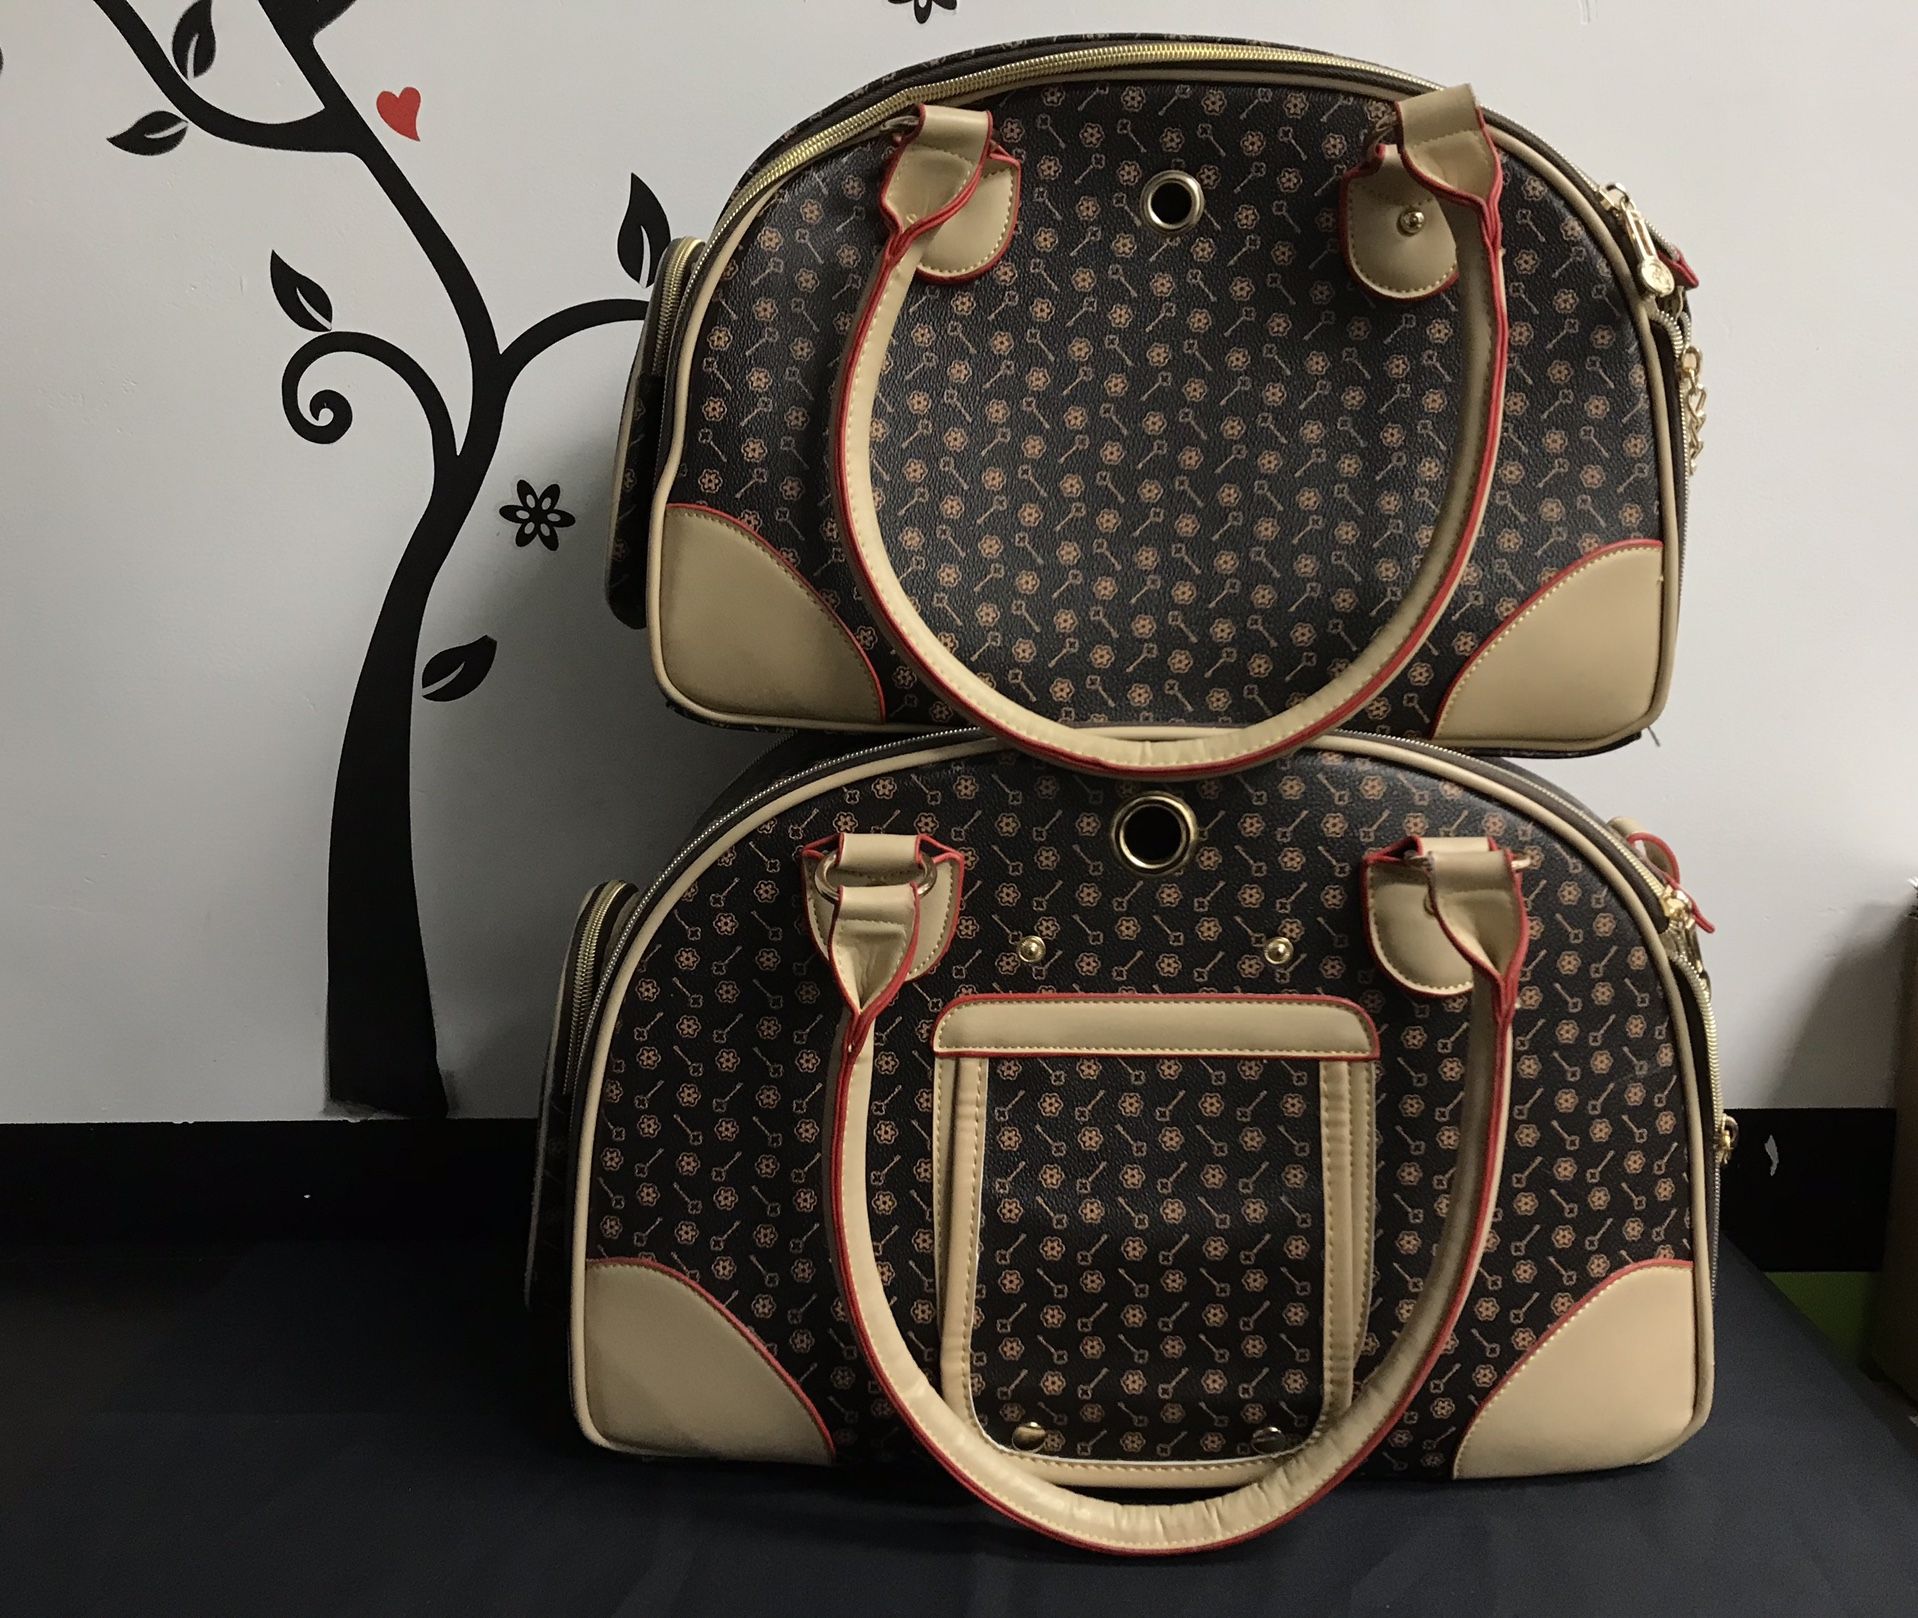 NEW! BETOP HOUSE PU Leather Fashion Dog Carrier Handbag Purse/Cat Tote Bag